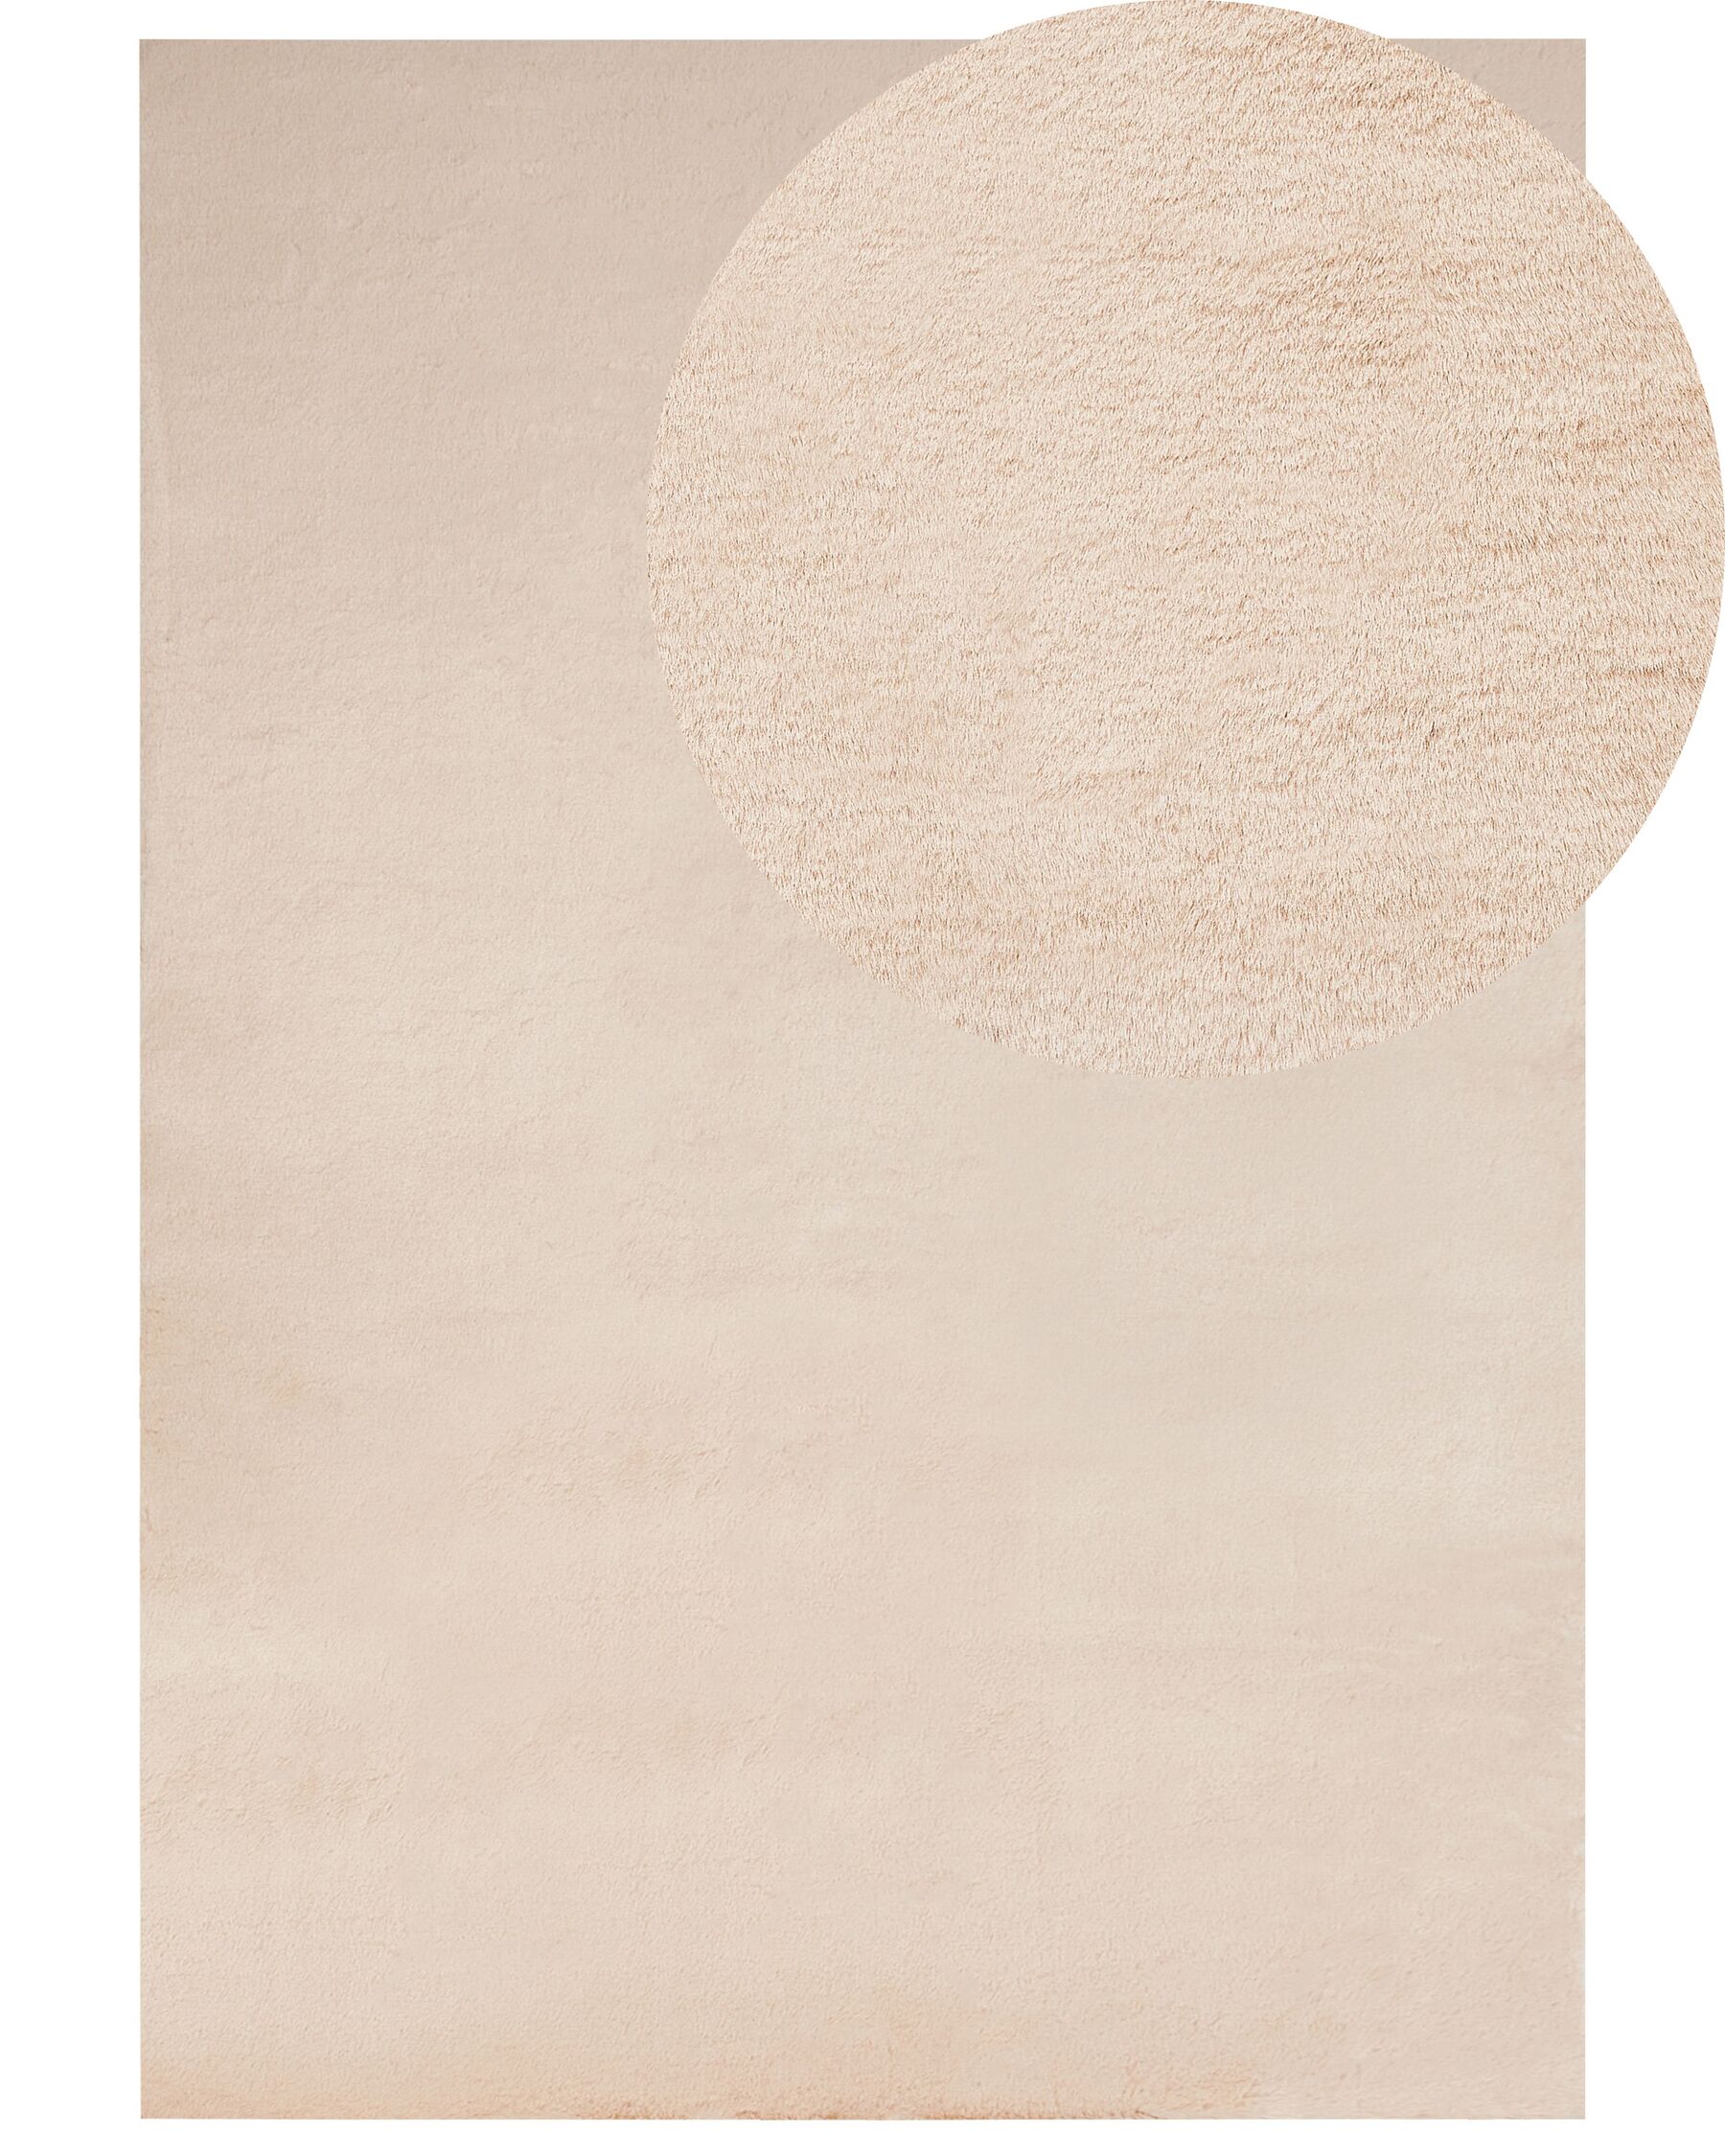 Vloerkleed kunstbont beige 160 x 230 cm MIRPUR_858873